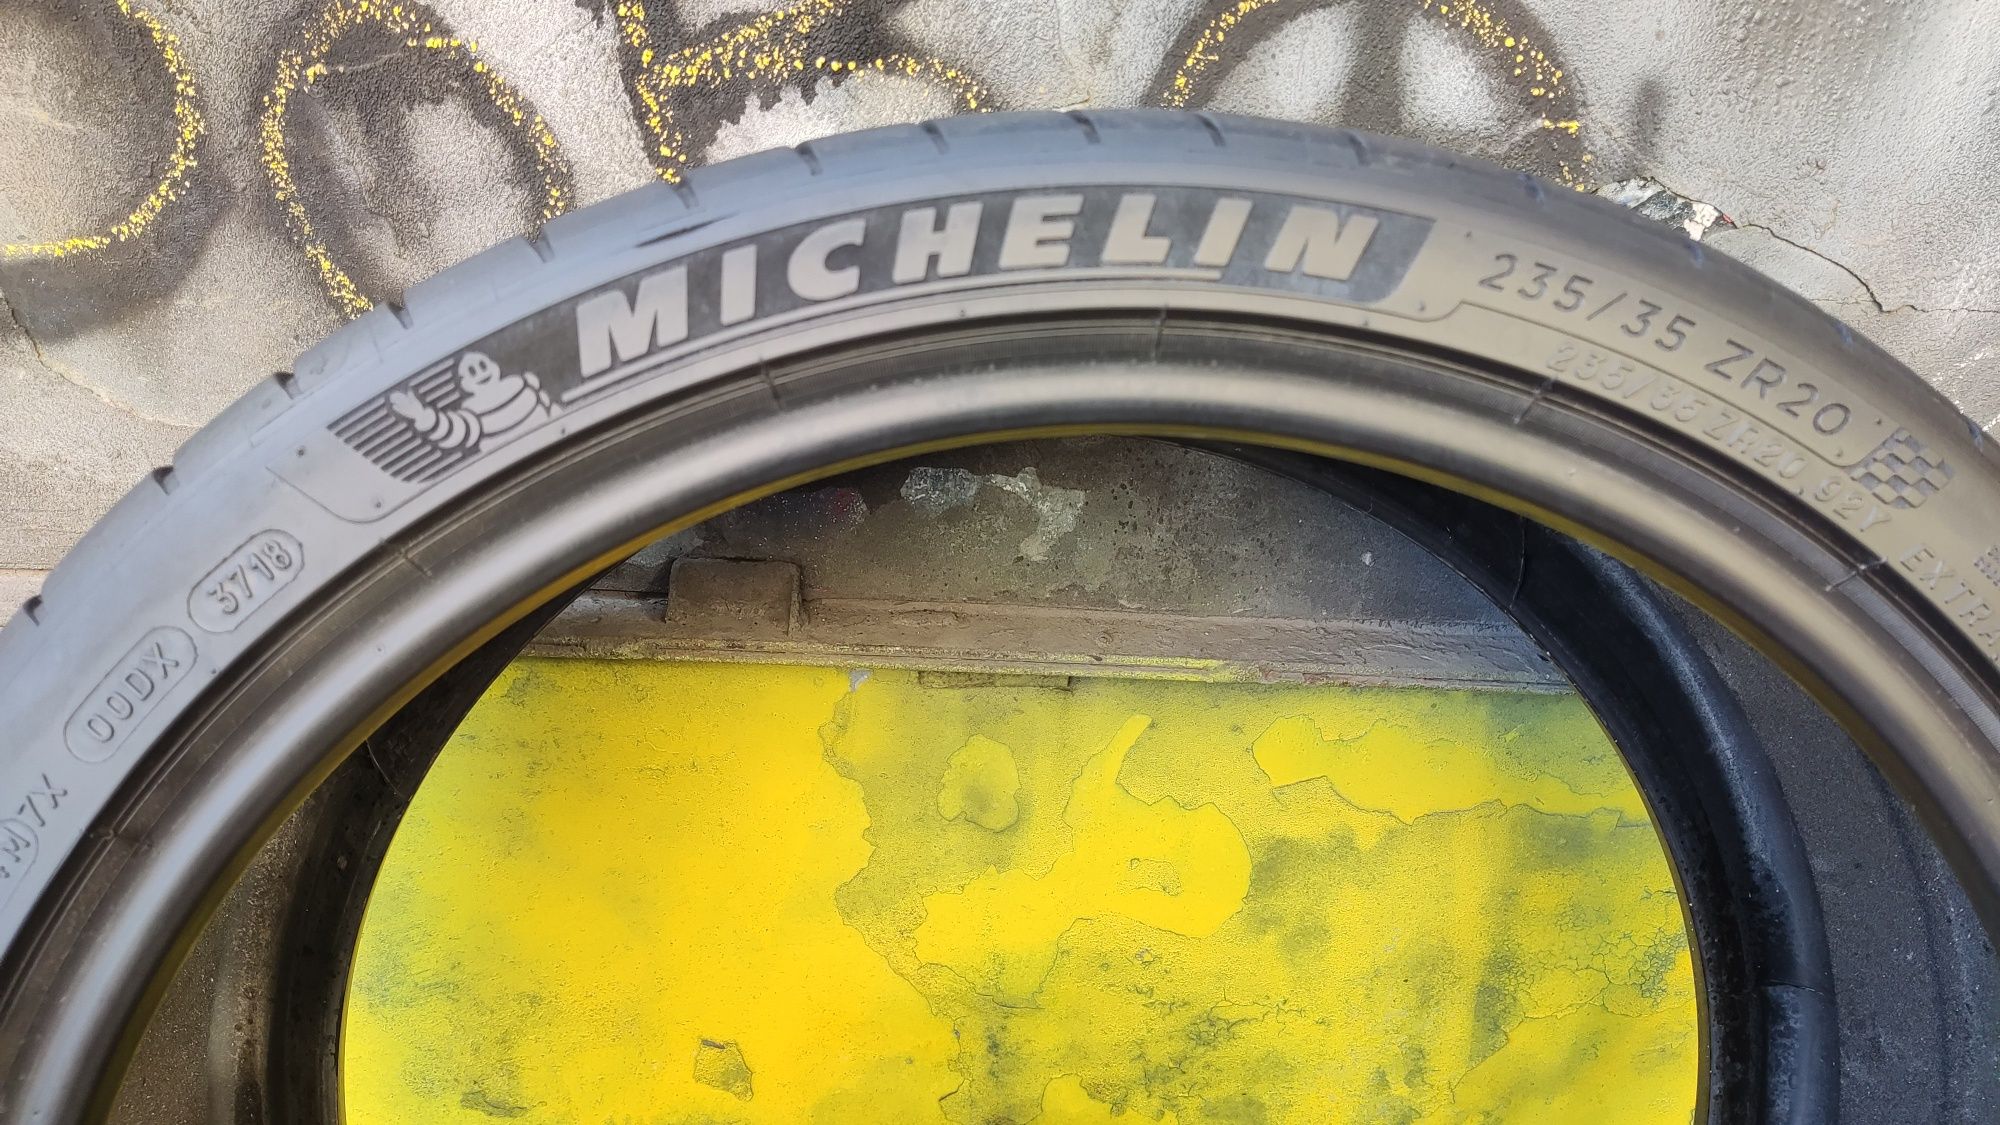 2бр летни гуми 235/35/20 Michelin Pilot Sport 4S
Dot0220-3718
5-5.5 mm